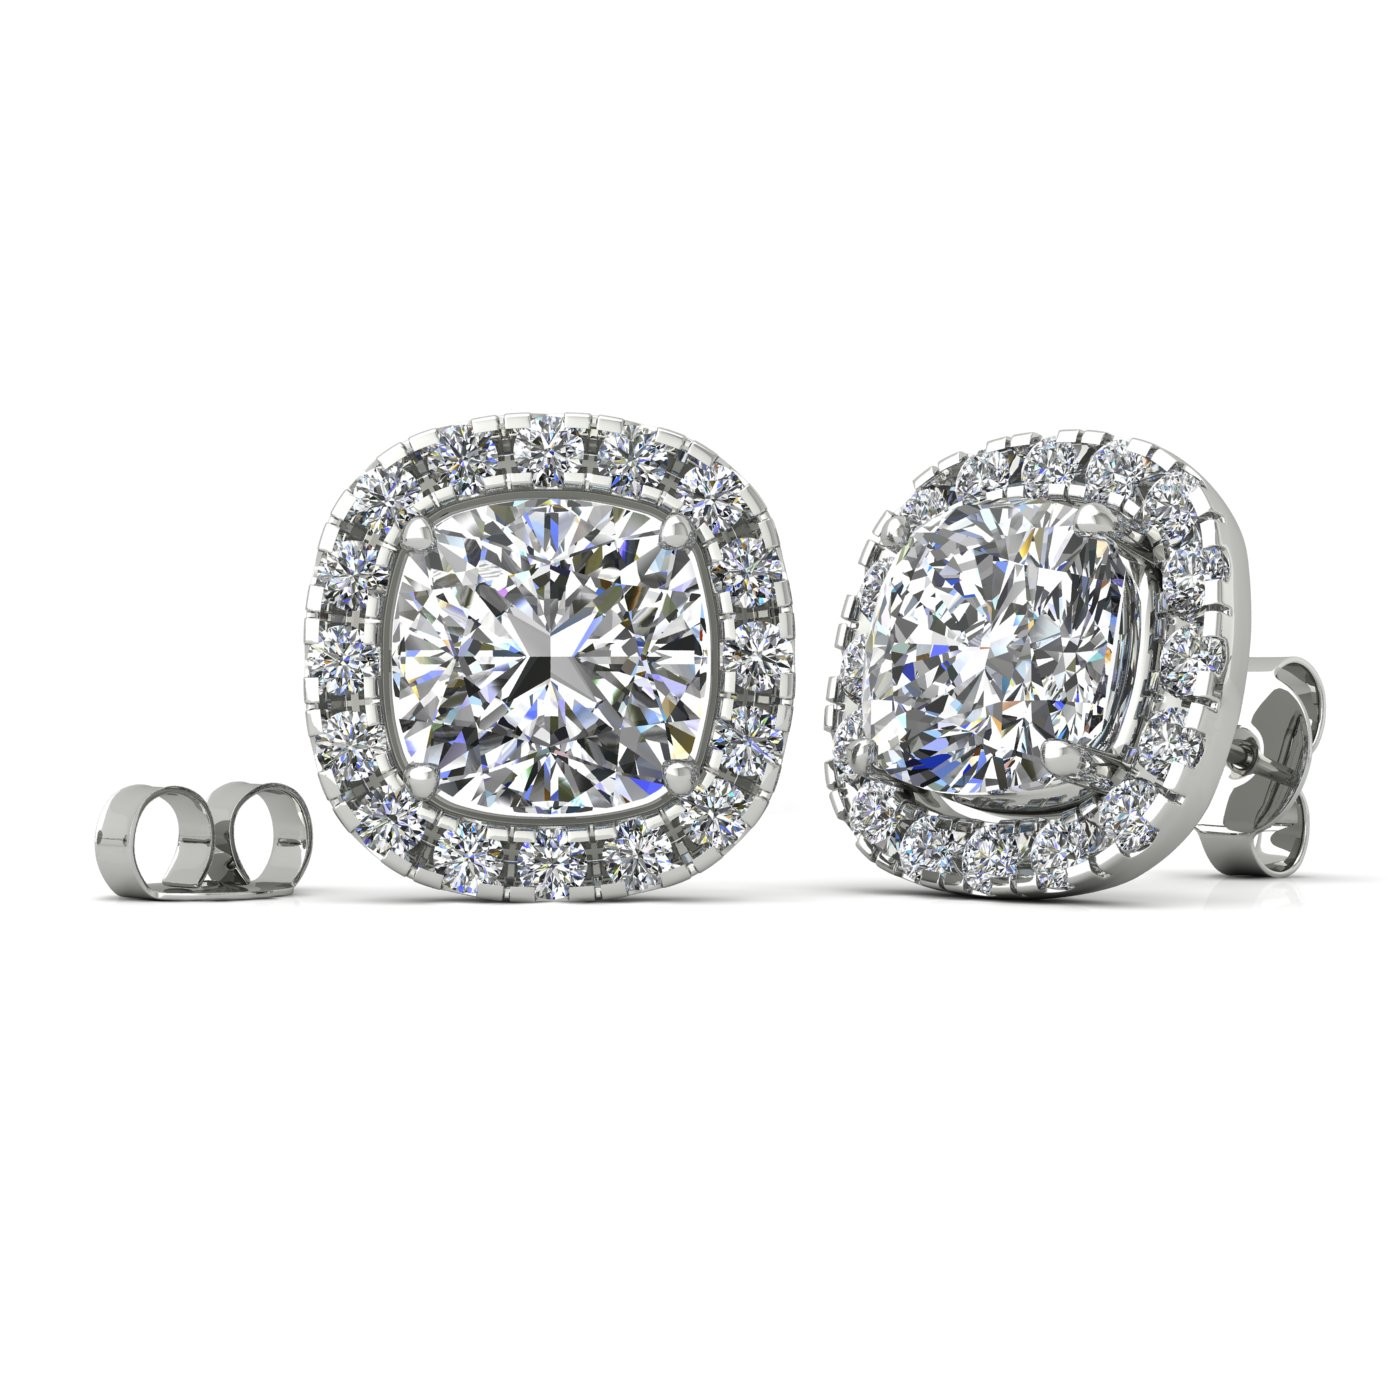 18k white gold  2,5 ct each (5,0 tcw) 4 prongs cushion shape diamond earrings with diamond pavÉ set halo Photos & images